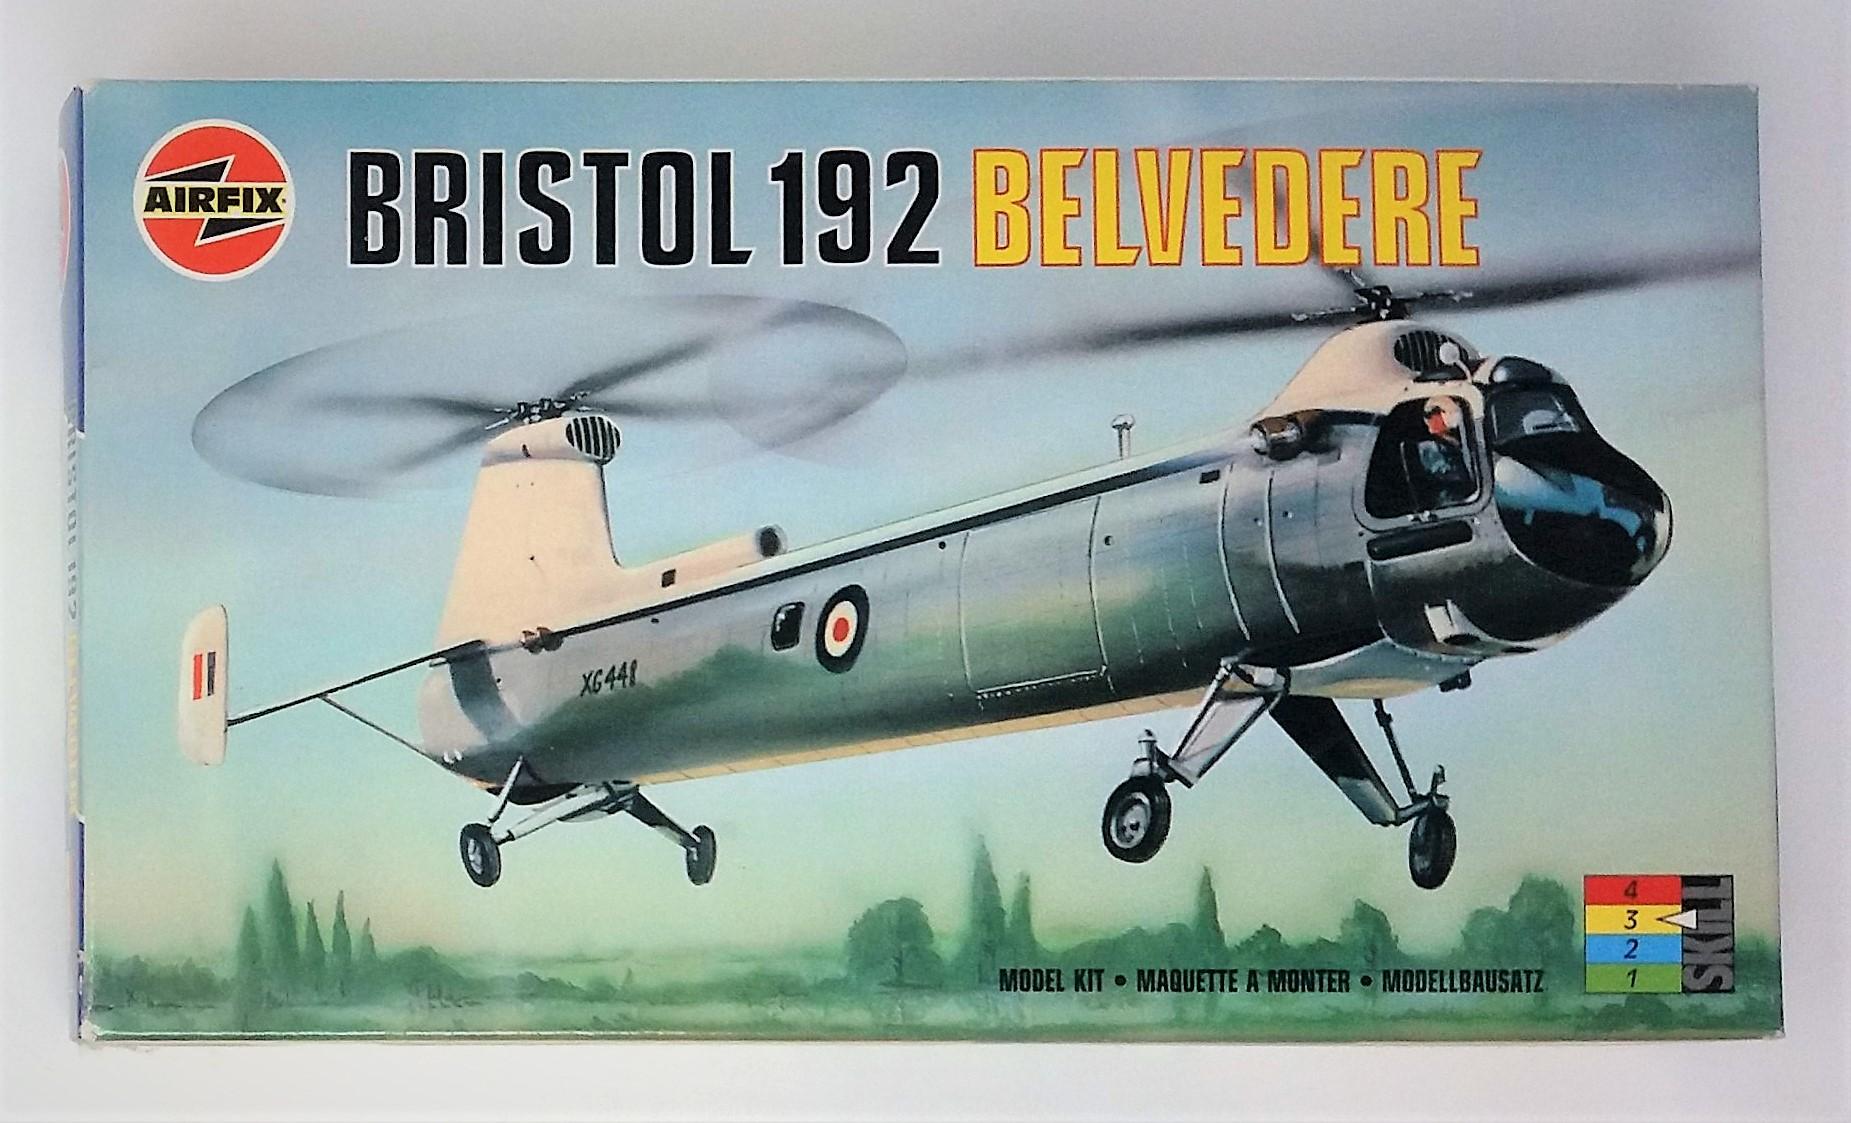 1/72 Scale Bristol 192 Belvedere Airfix Plastic Model Kit